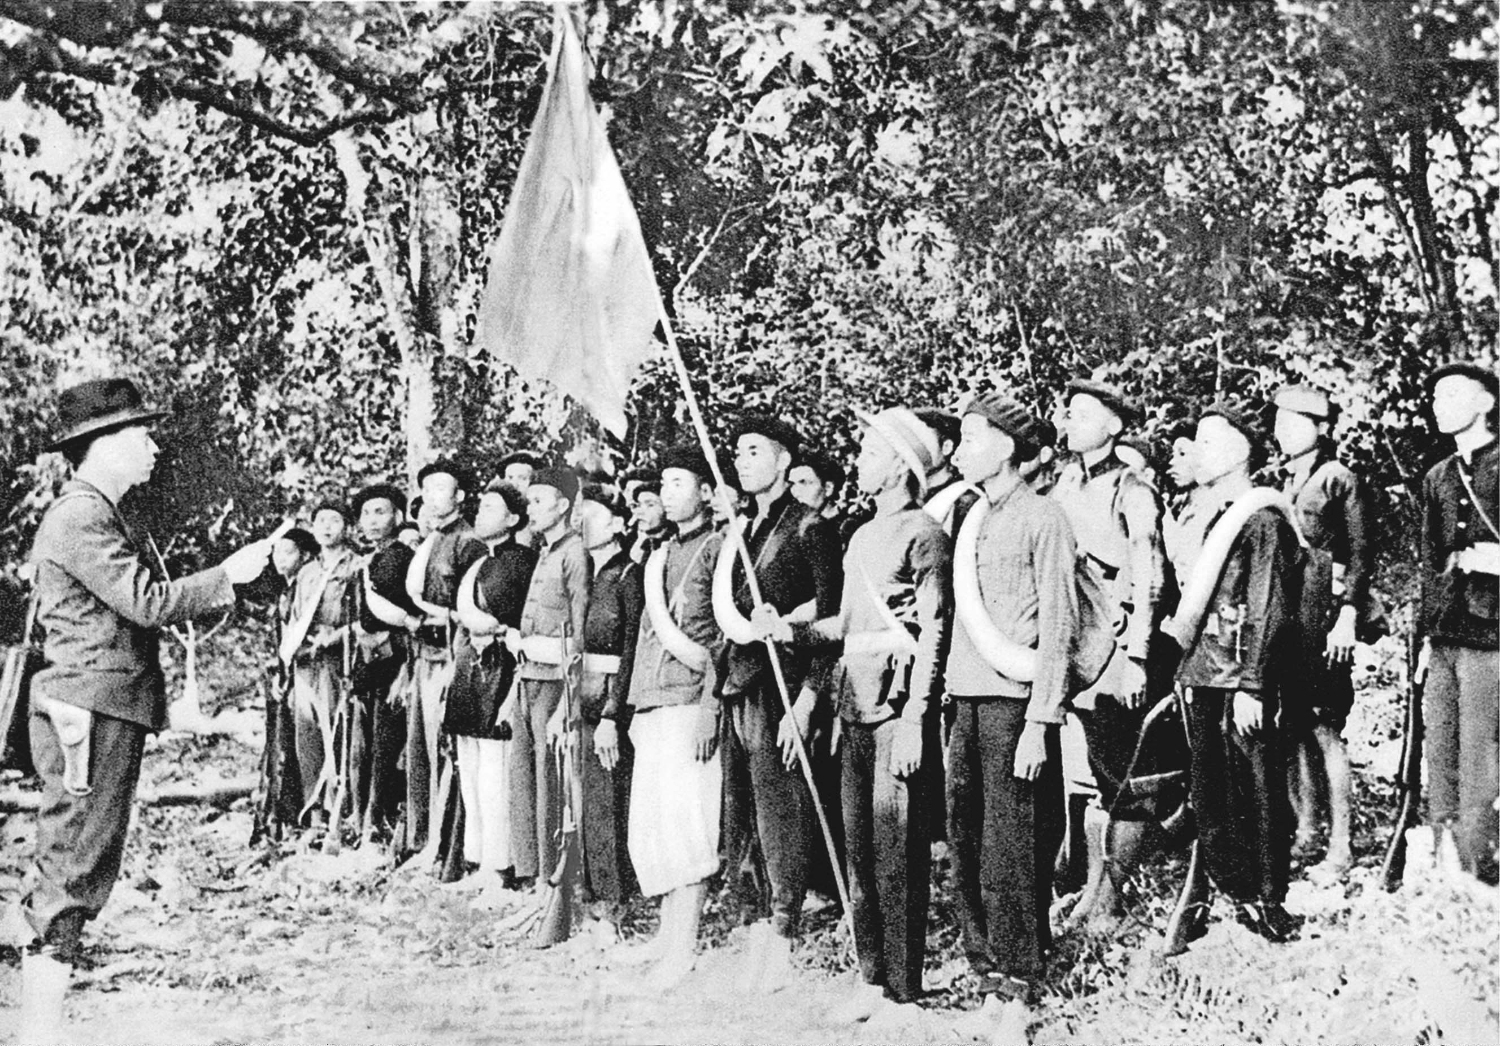 Vo Nguyen Giap, Vietminh forces, 1944